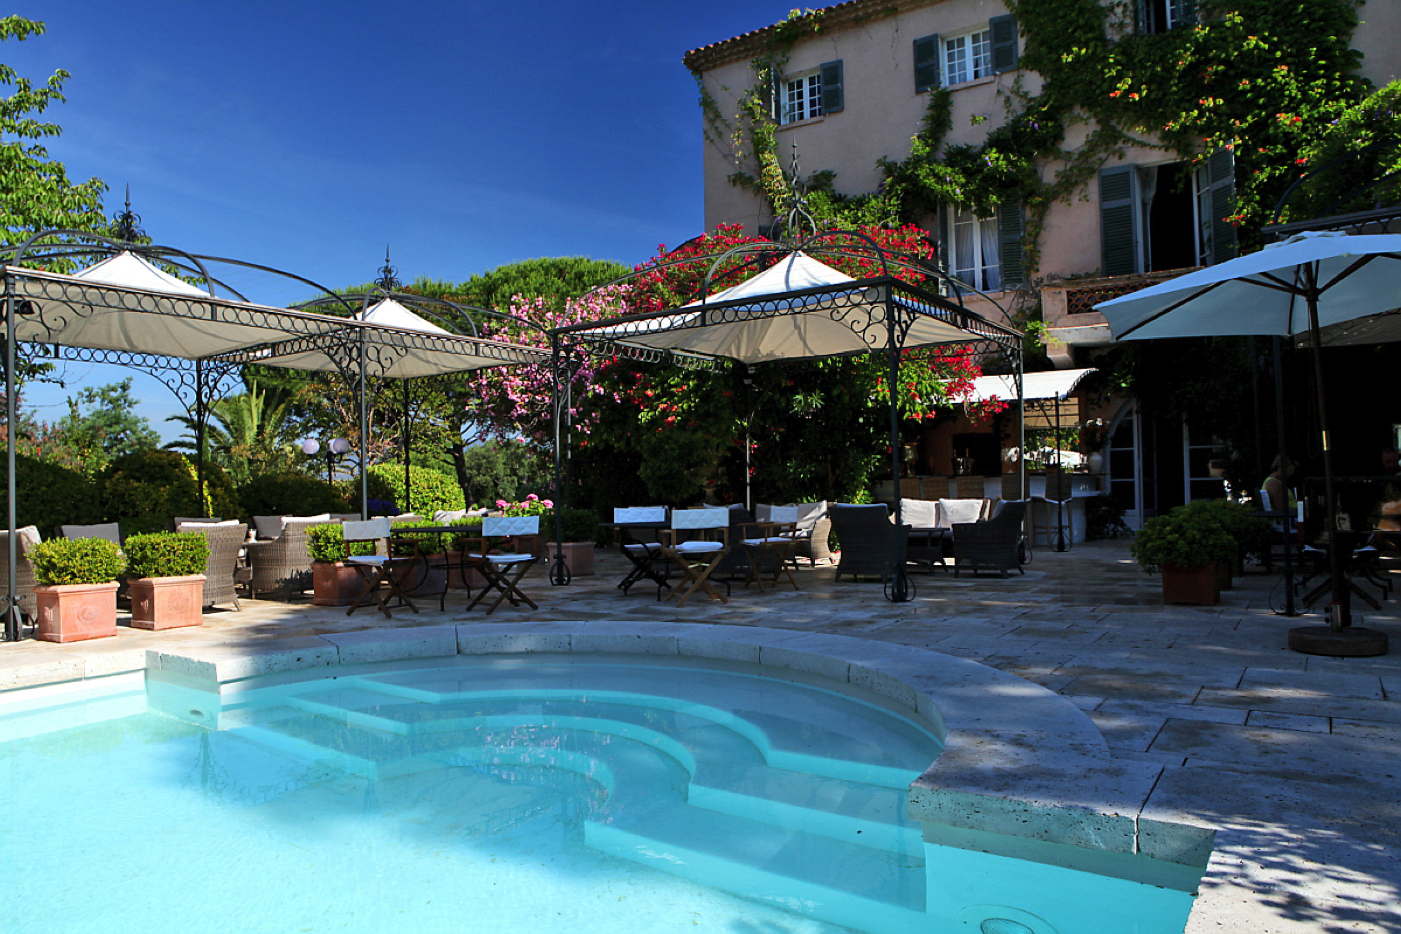 Luxury hotel in park-like garden in the hills of St. Tropez France